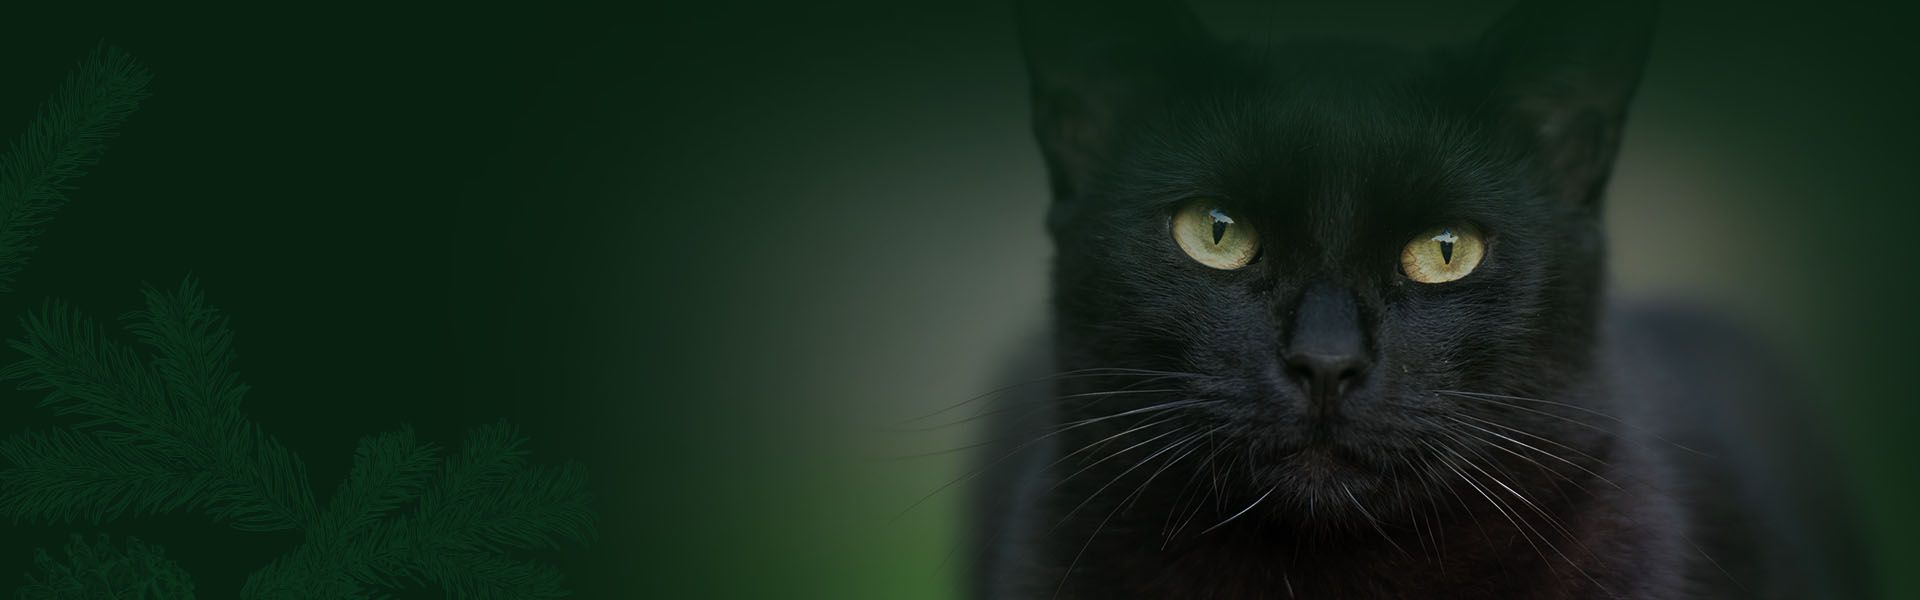 serious black cat looking at camera